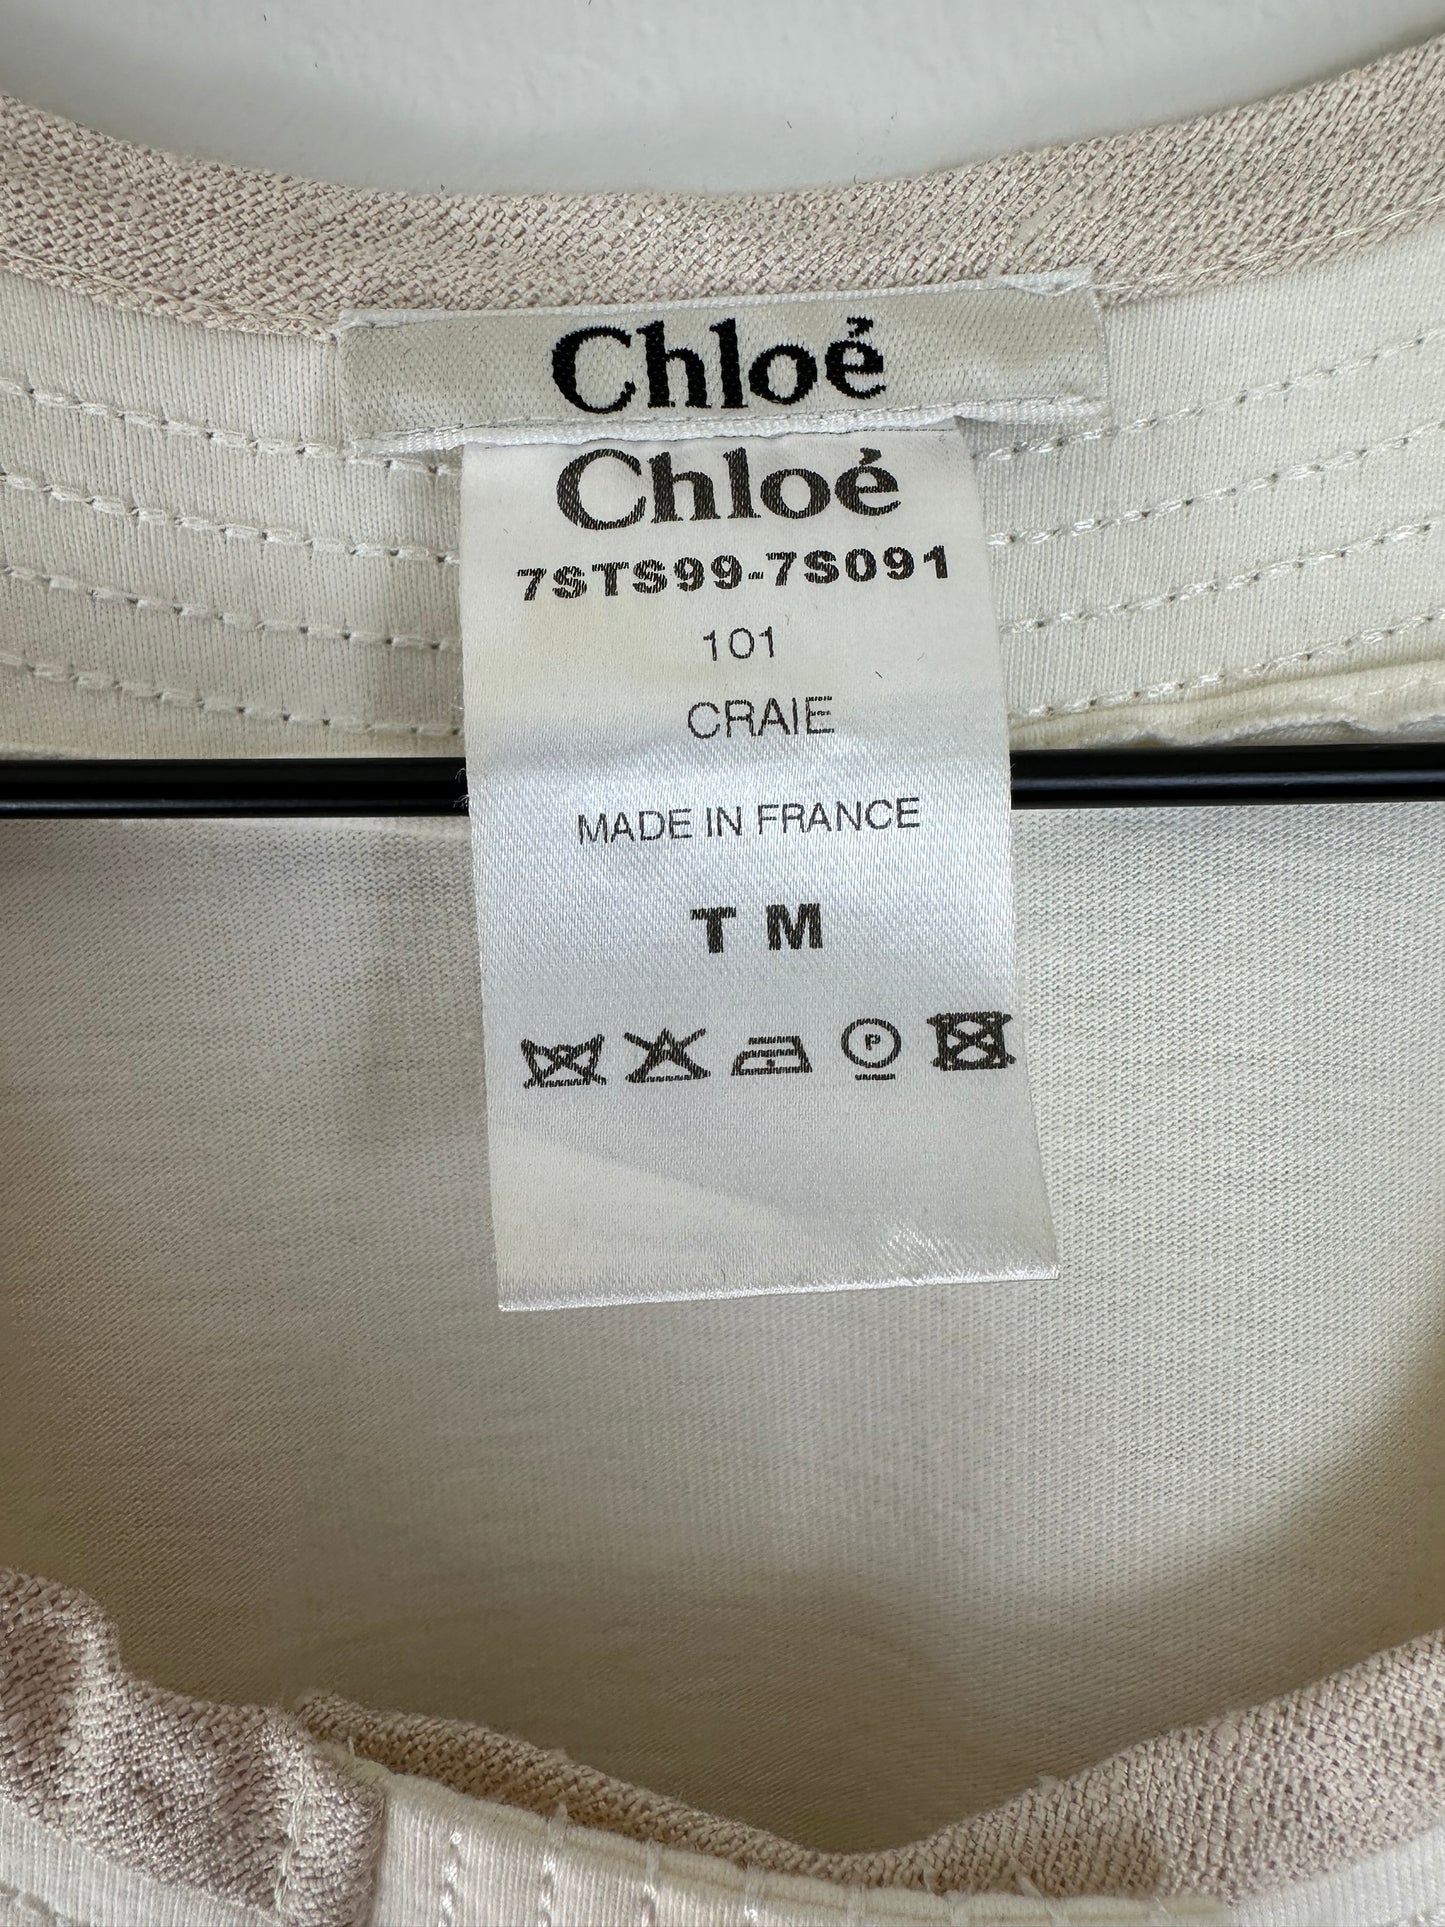 Chloé Cream Summer Cotton and Silk Dress Size Small